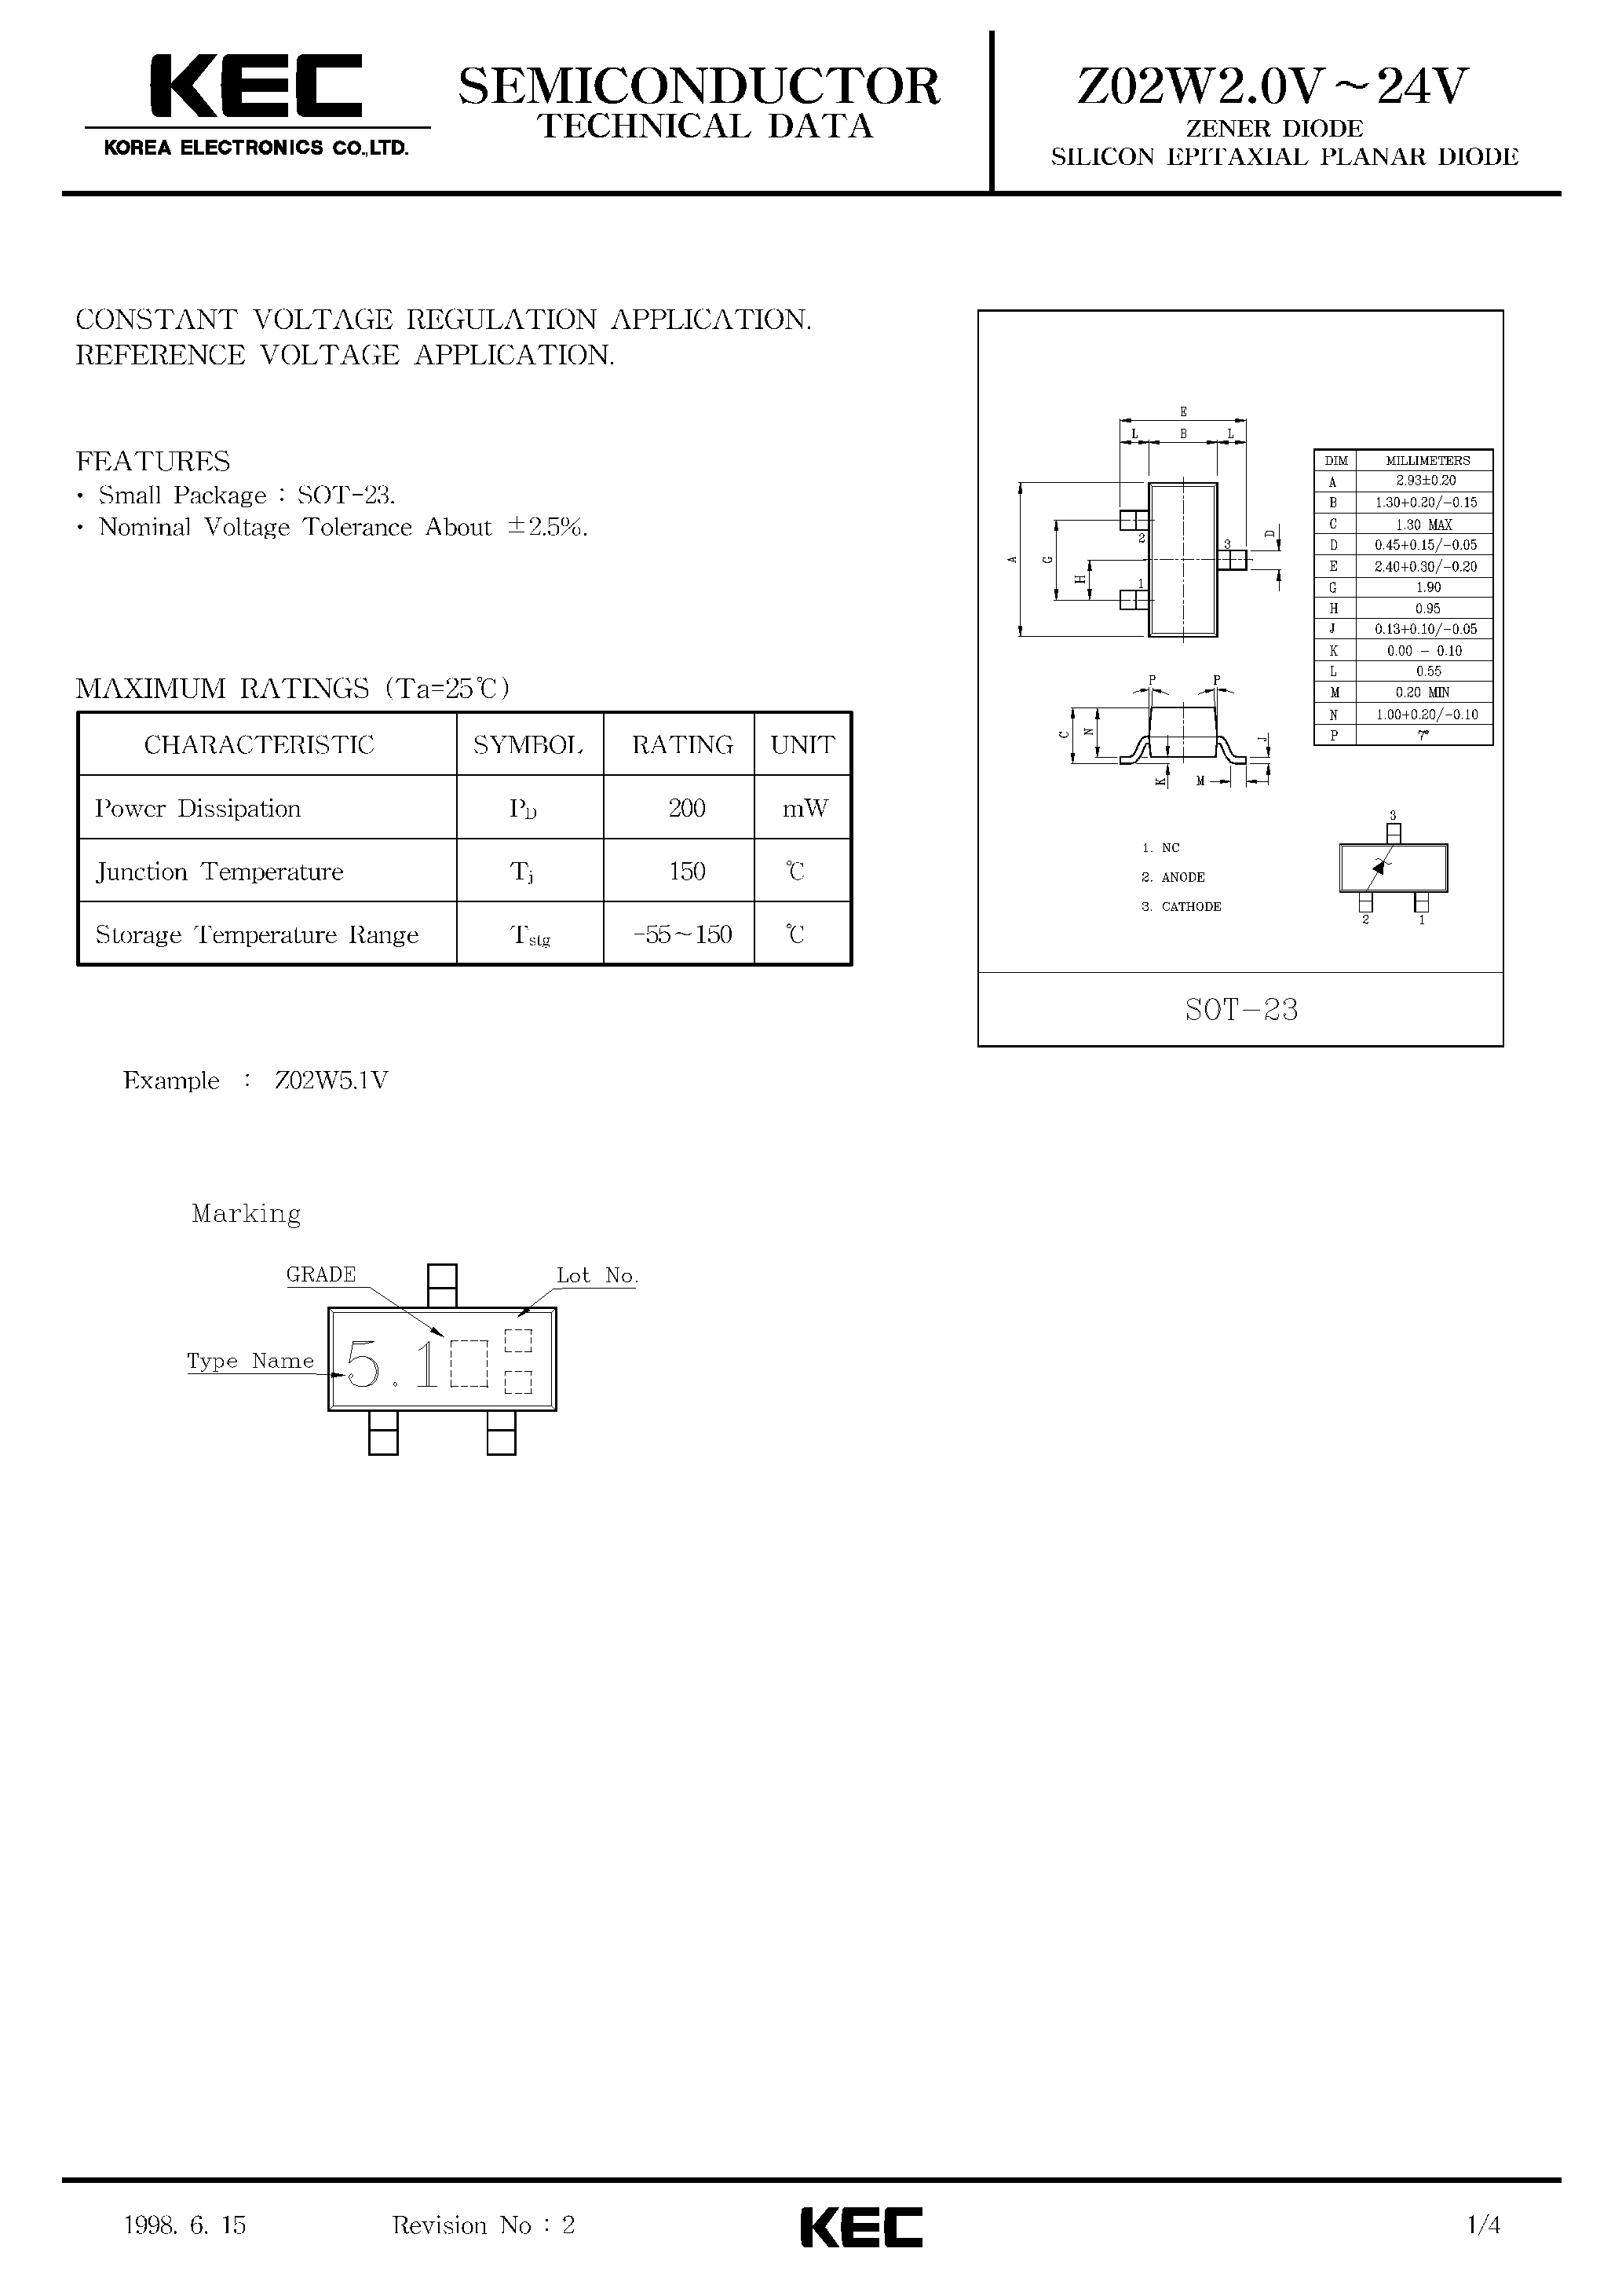 Datasheet Z02W75V - ZENER DIODE SILICON EPITAXIAL PLANAR DIODE (CONSTANT VOLTAGE REGULATION/ REFERENCE VOLTAGE) page 1